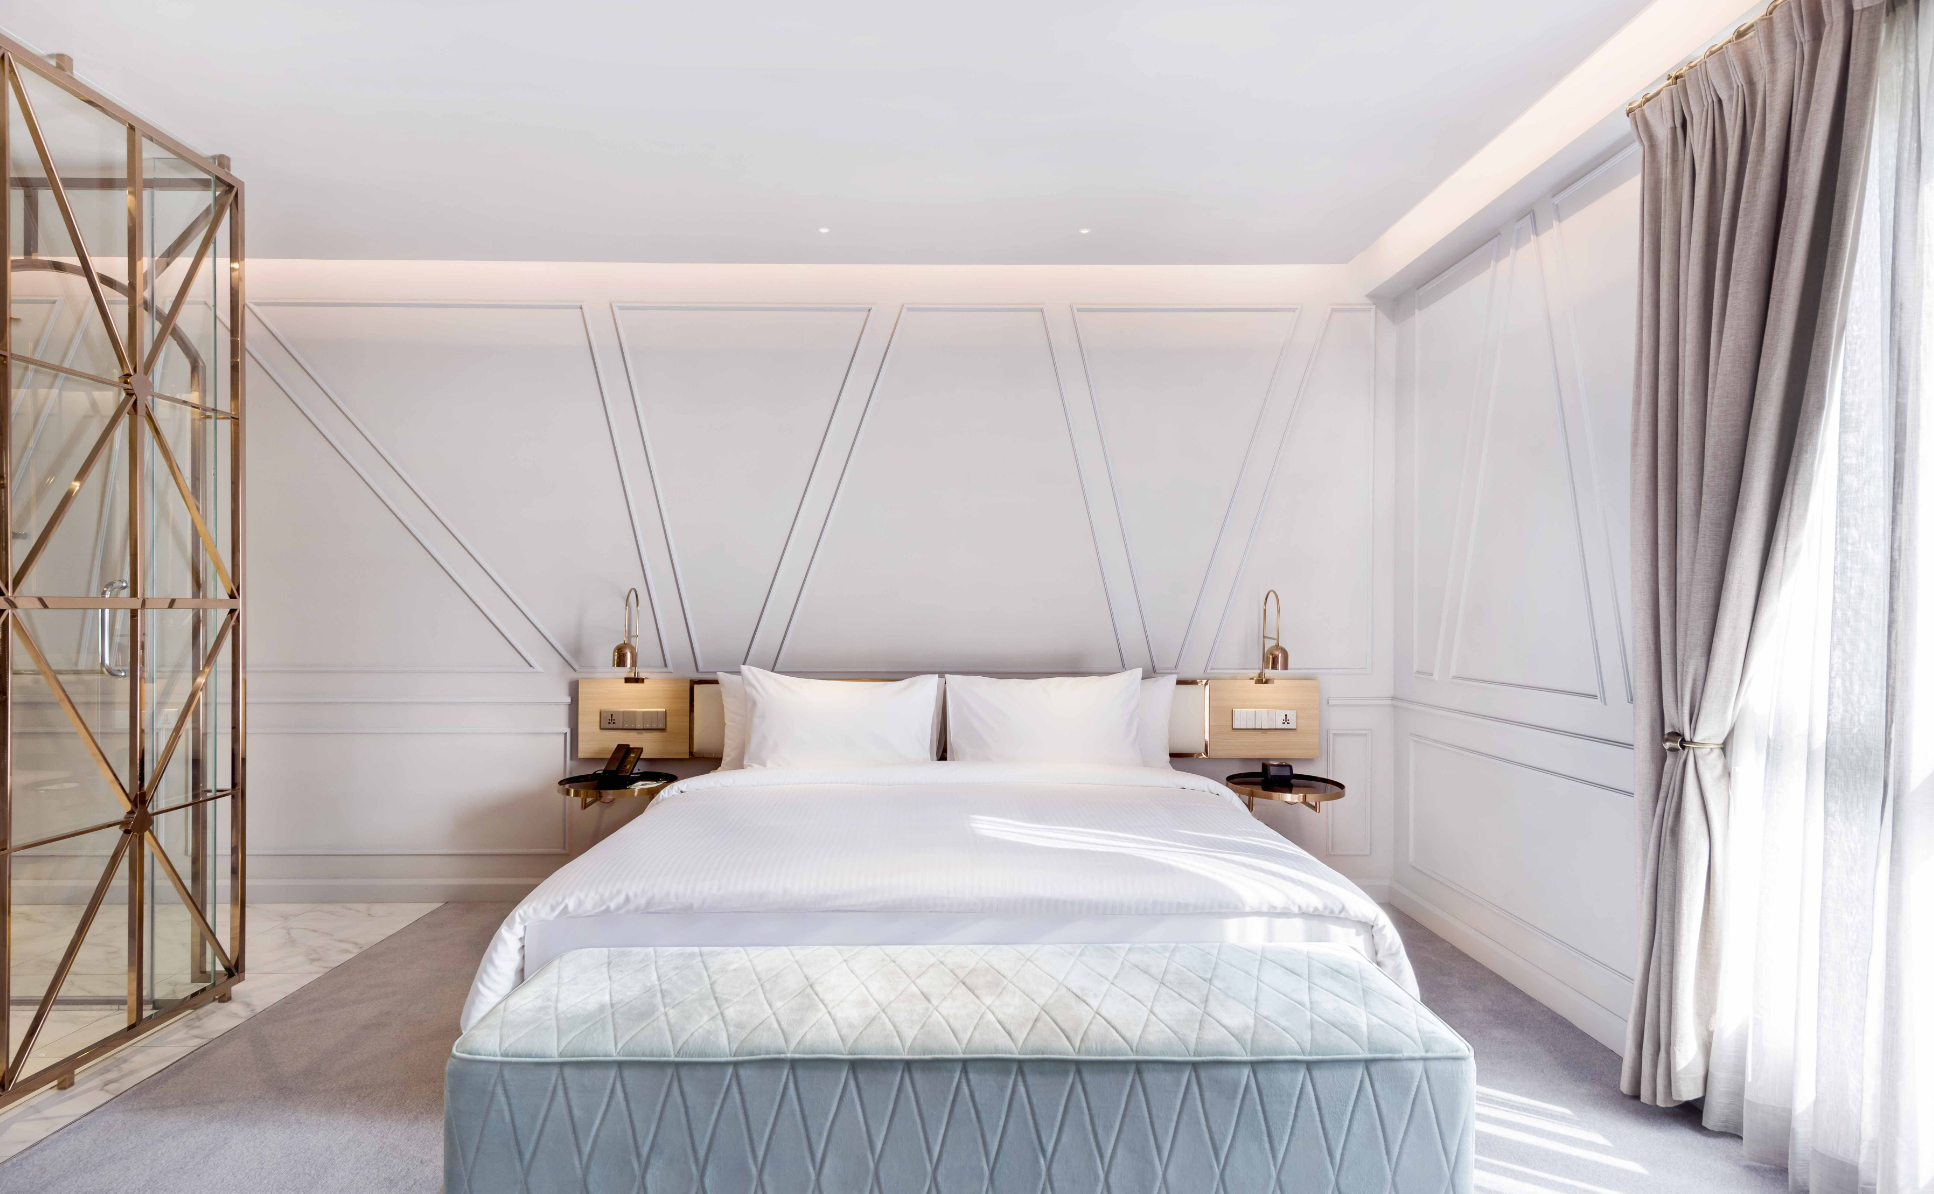 The Prestige Hotel - bed